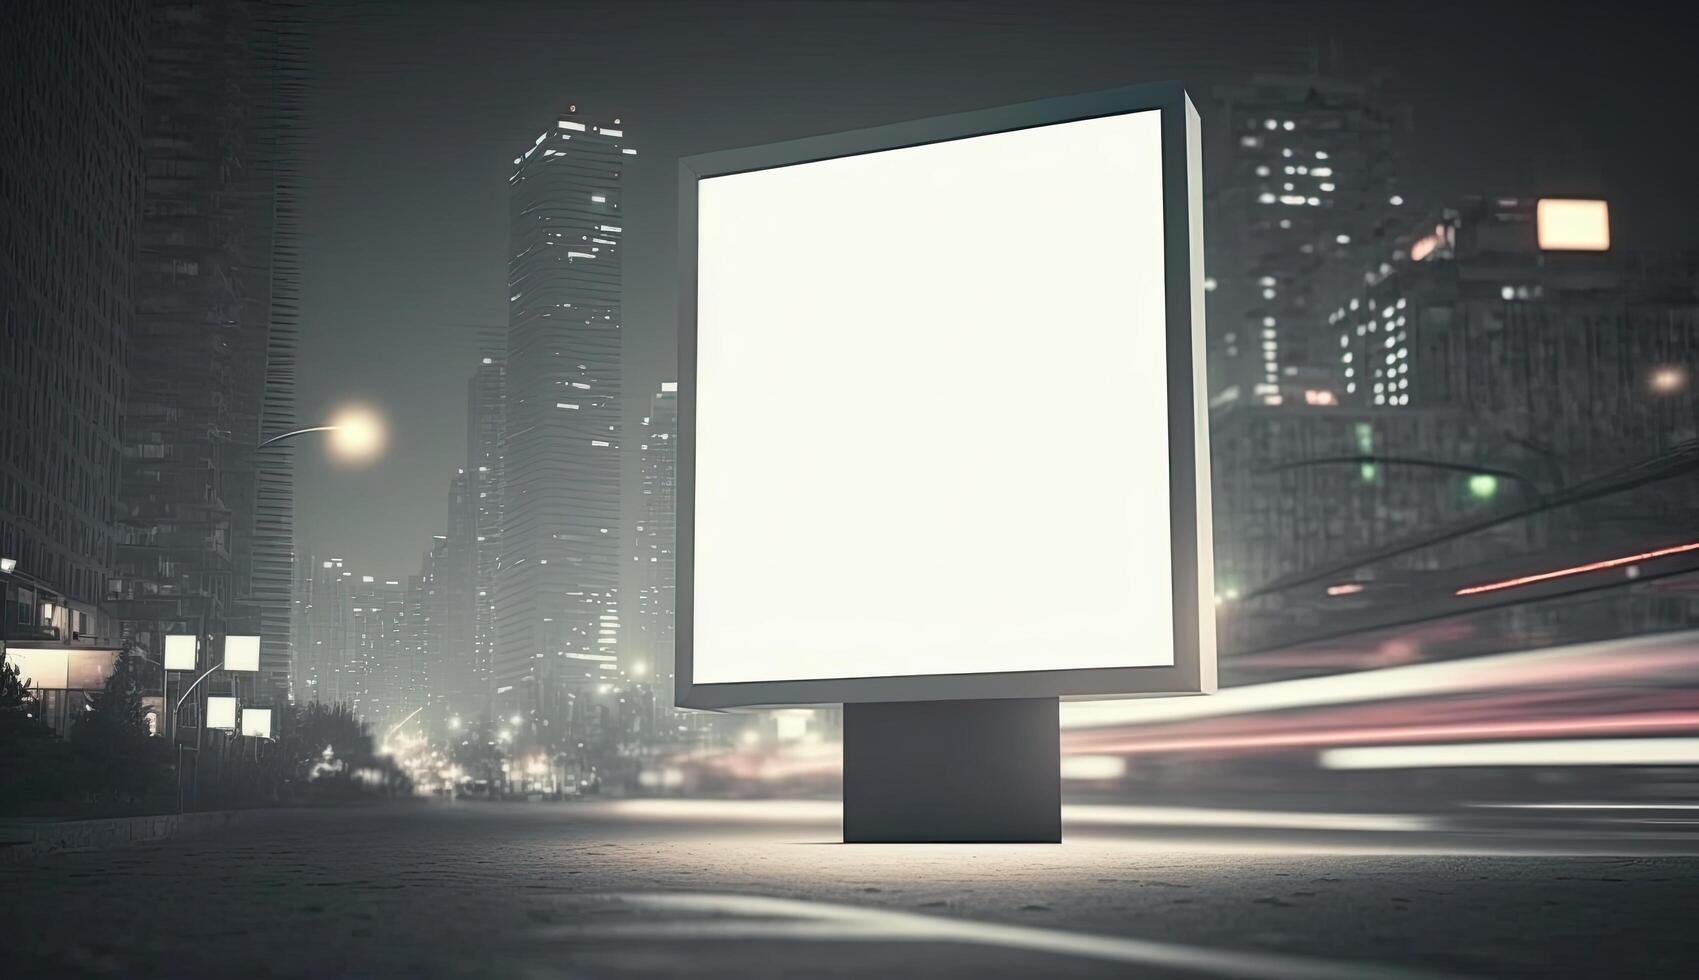 Futuristic city with white blank billboard, night view photo